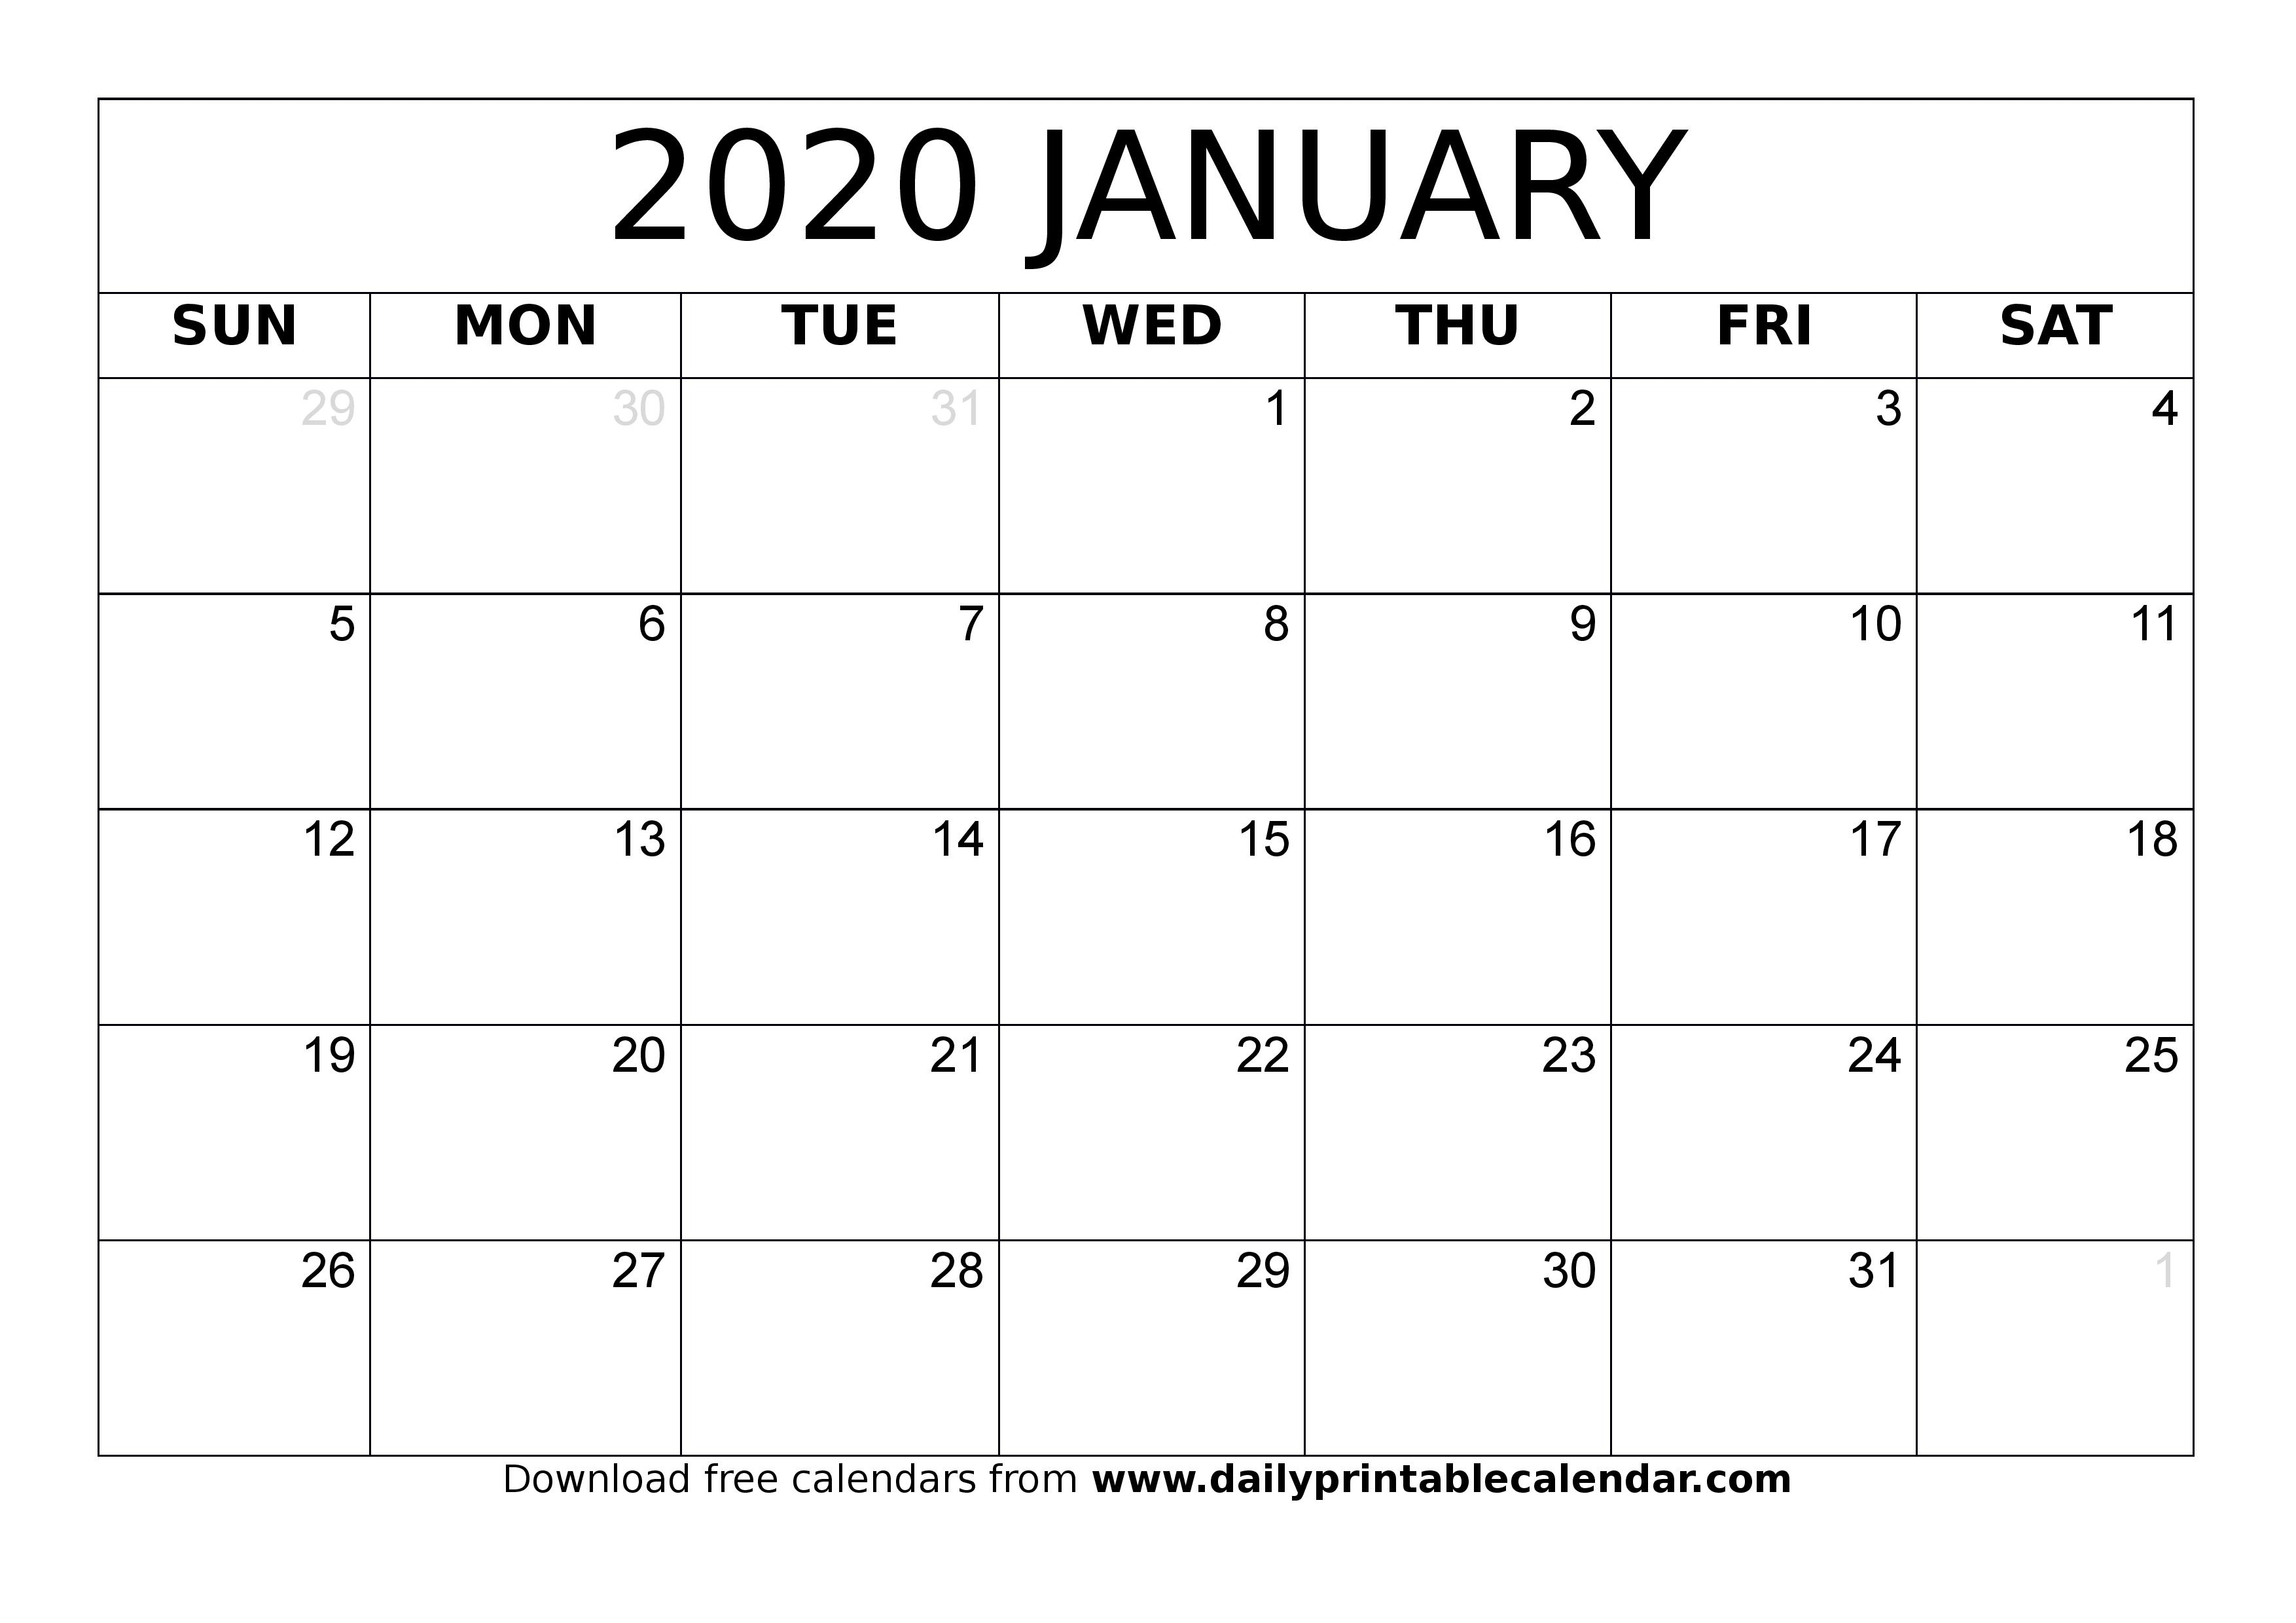 January 2020 Calendar Printable  Blank Templates  2020 with regard to Show Calendar For January 2020